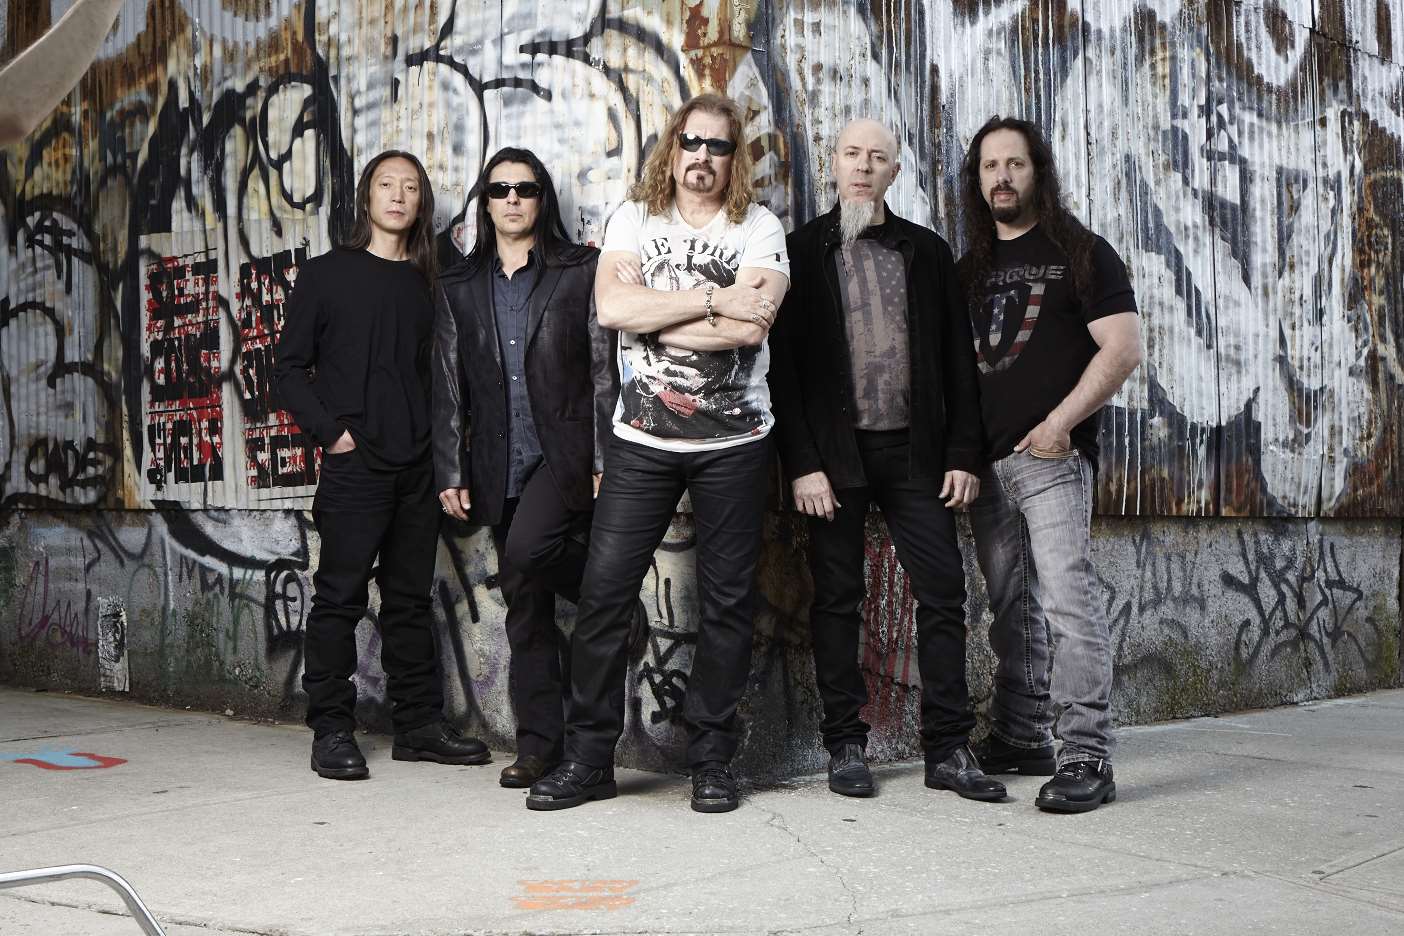 Masters of progressive metal Dream Theater